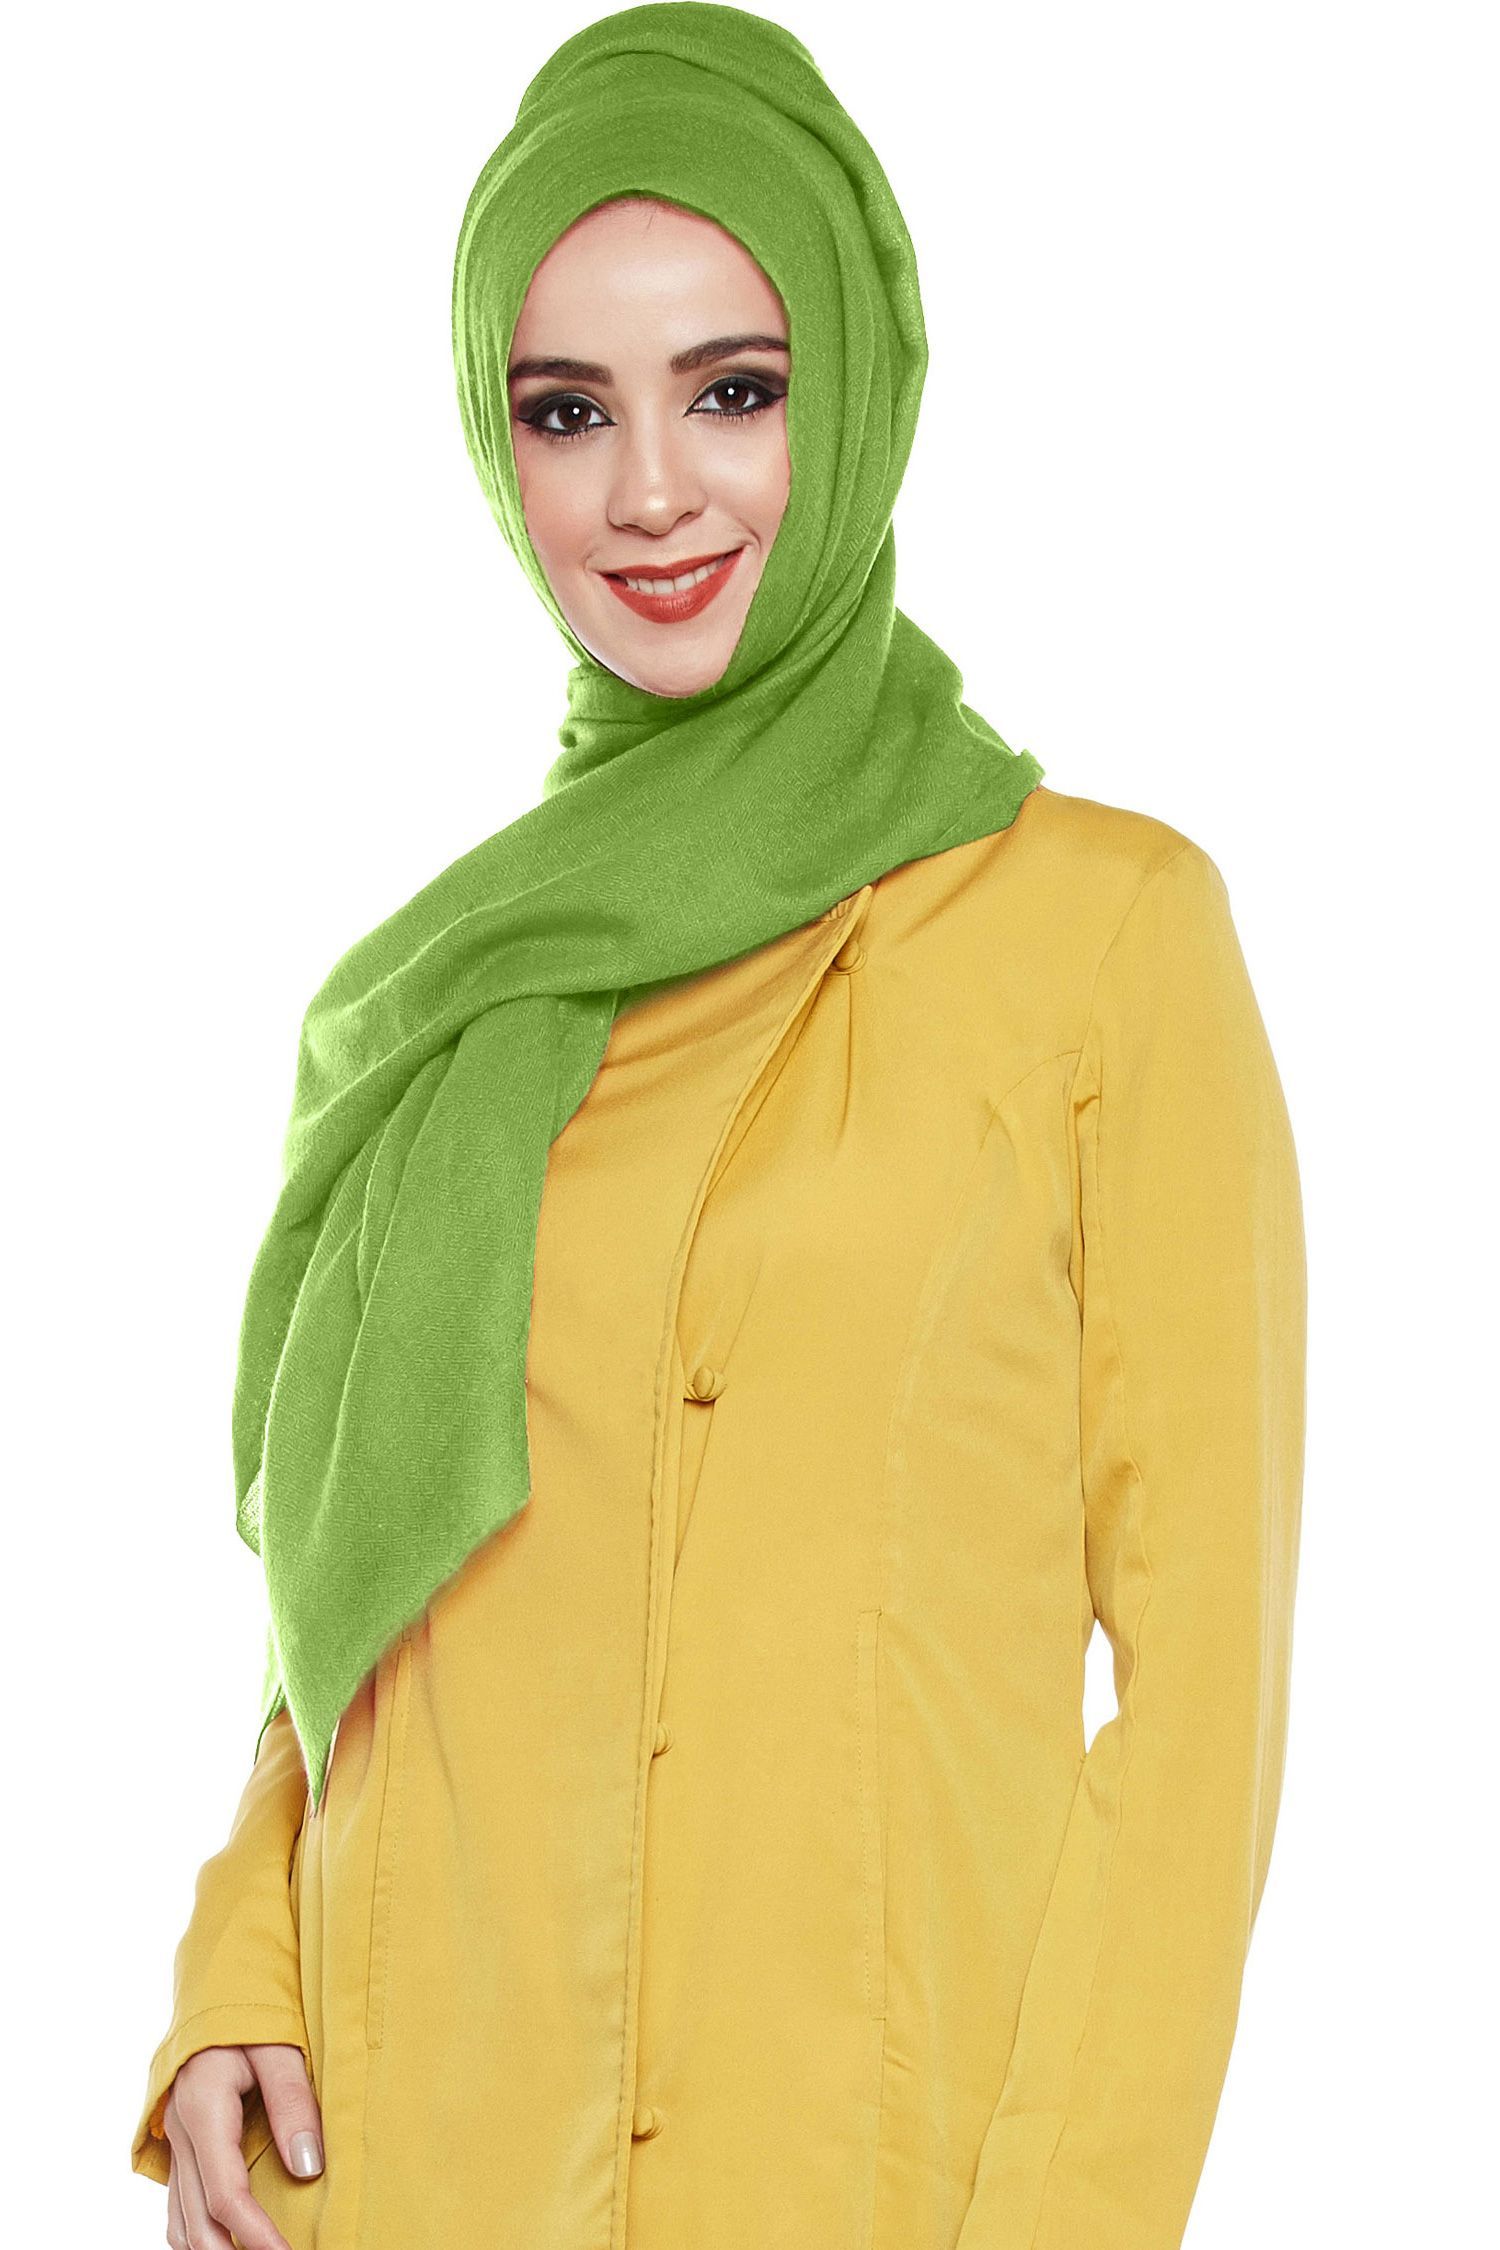 Fern Green Pashmina Hijab | Handmade Cashmere Head Scarf